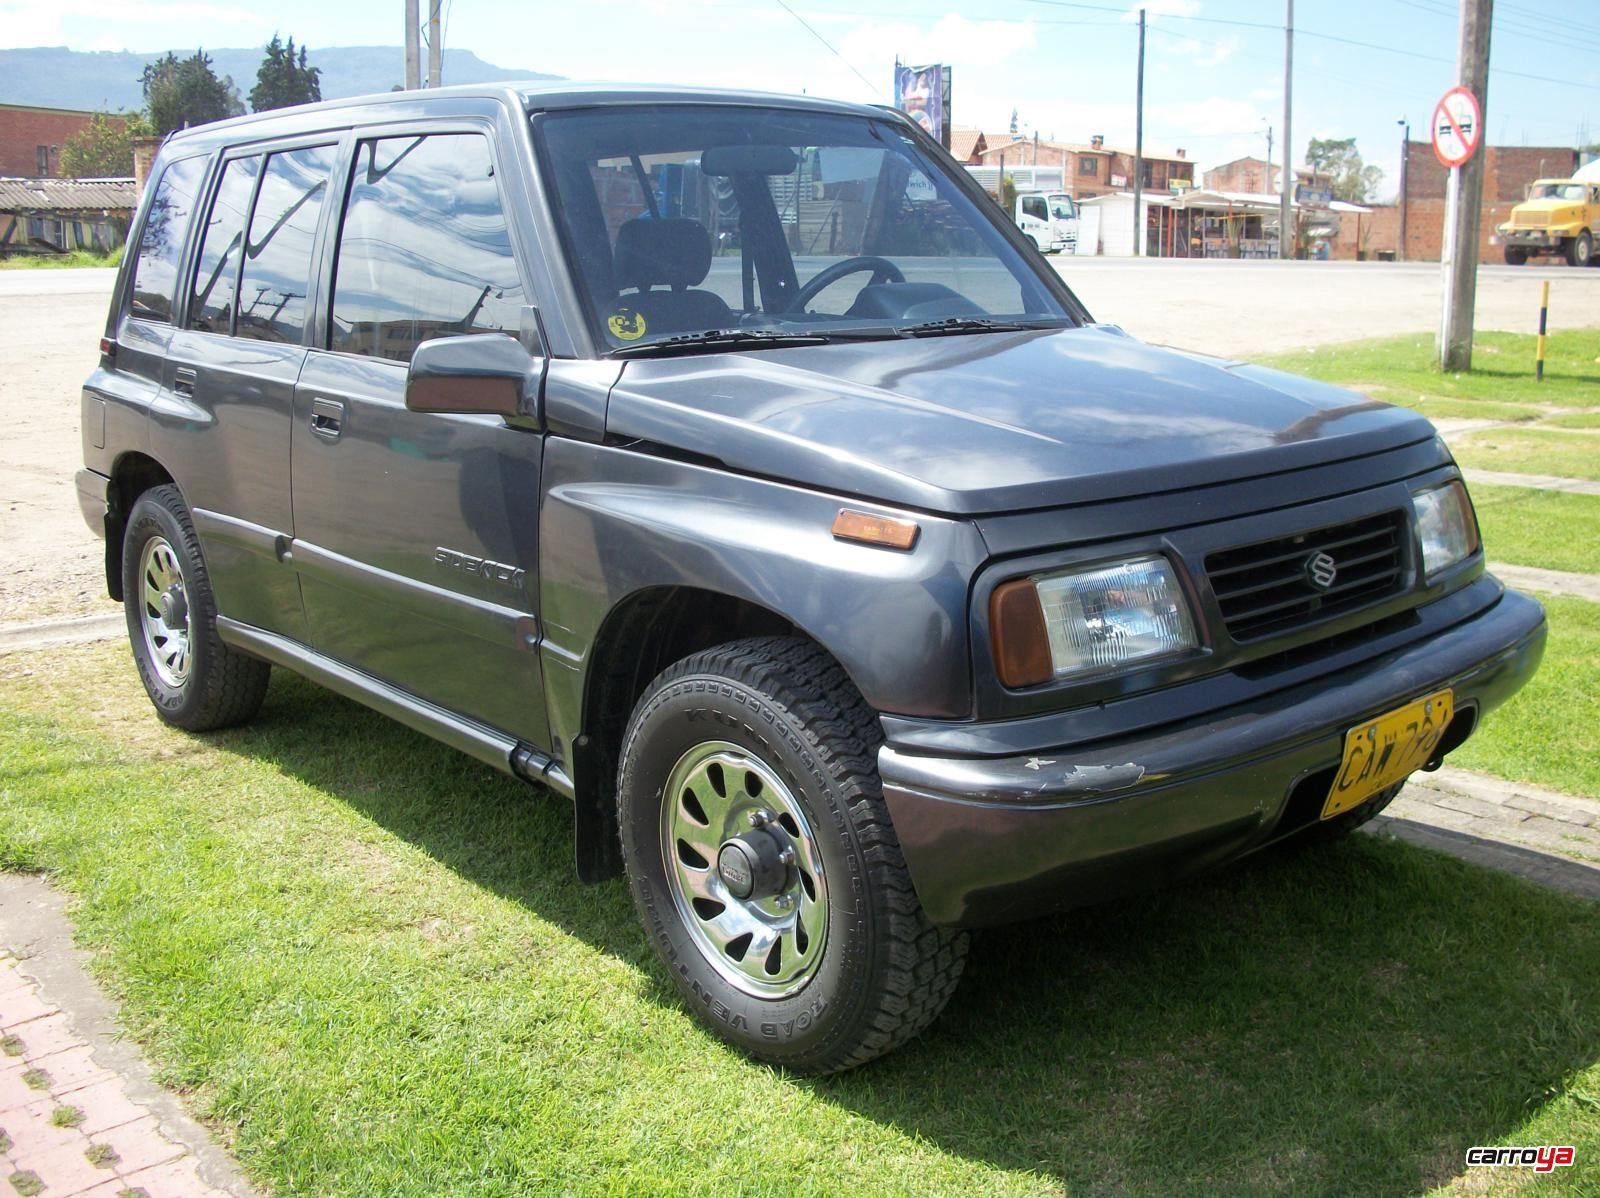 Эскудо 1993. Сузуки эскудо 1993. Suzuki эскудо 1993. Suzuki Escudo 1993 коротыш. Сузуки эскудо 1993 1,6.